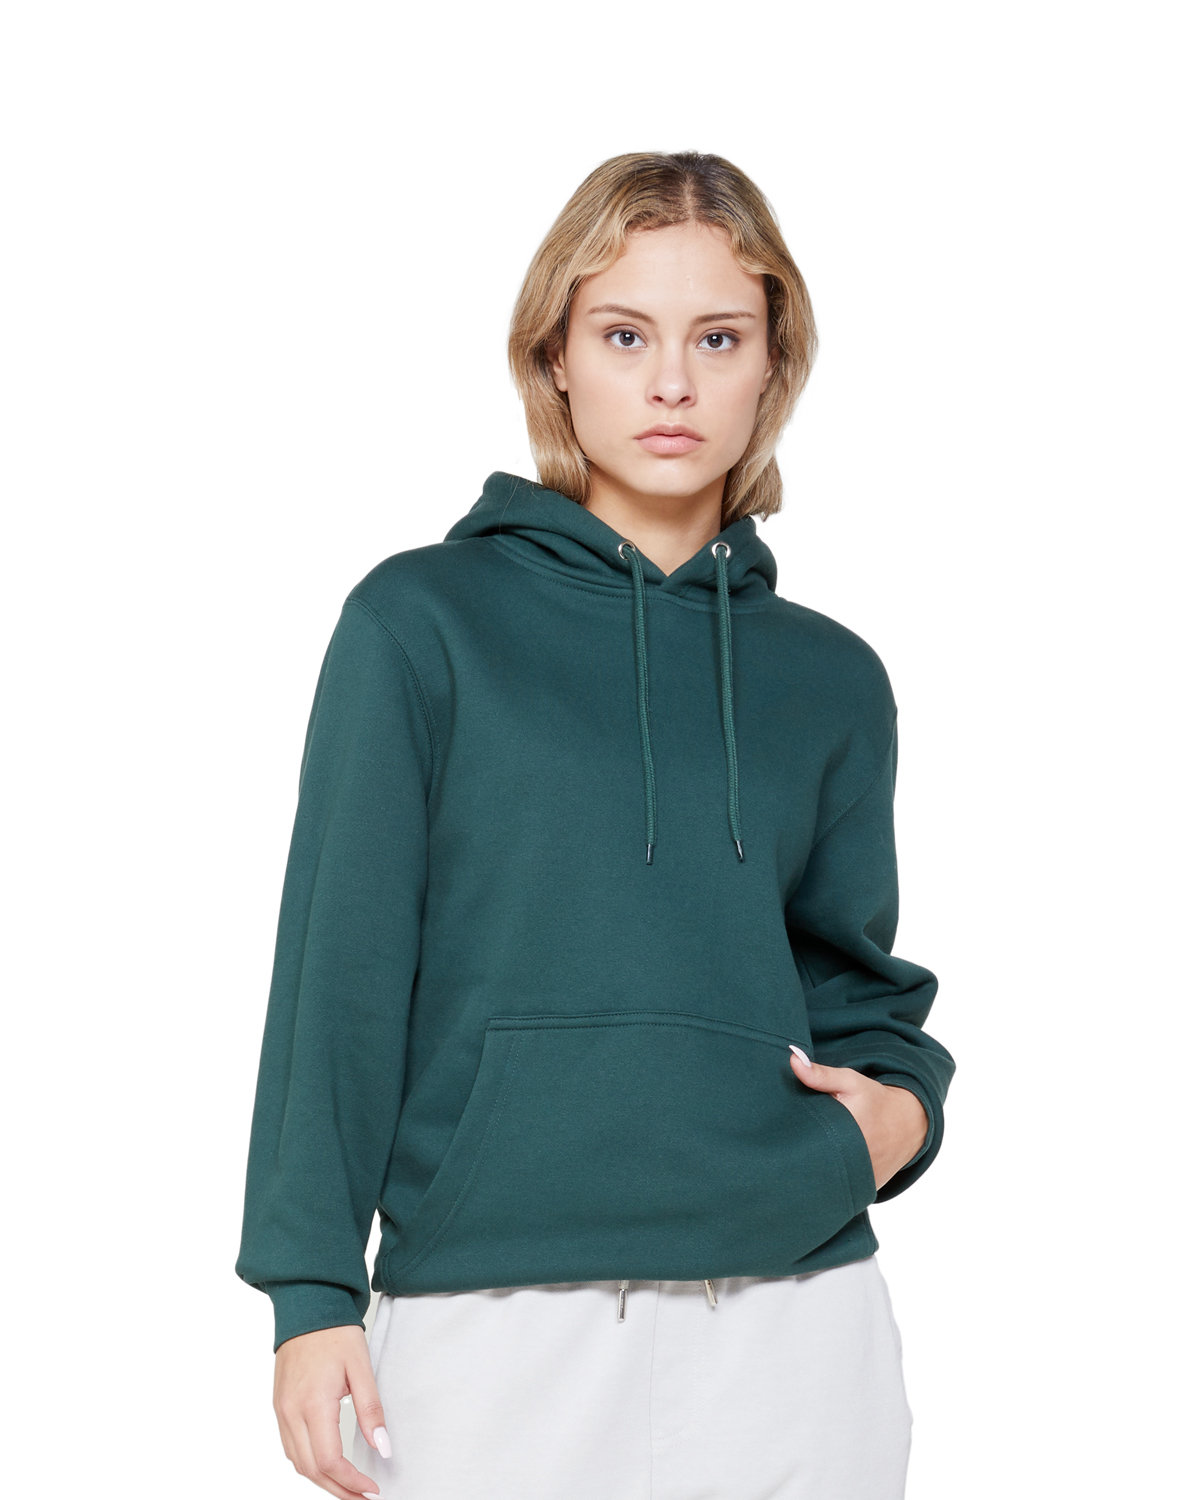 Lane Seven Unisex Premium Pullover Hooded Sweatshirt SPORT GREEN 